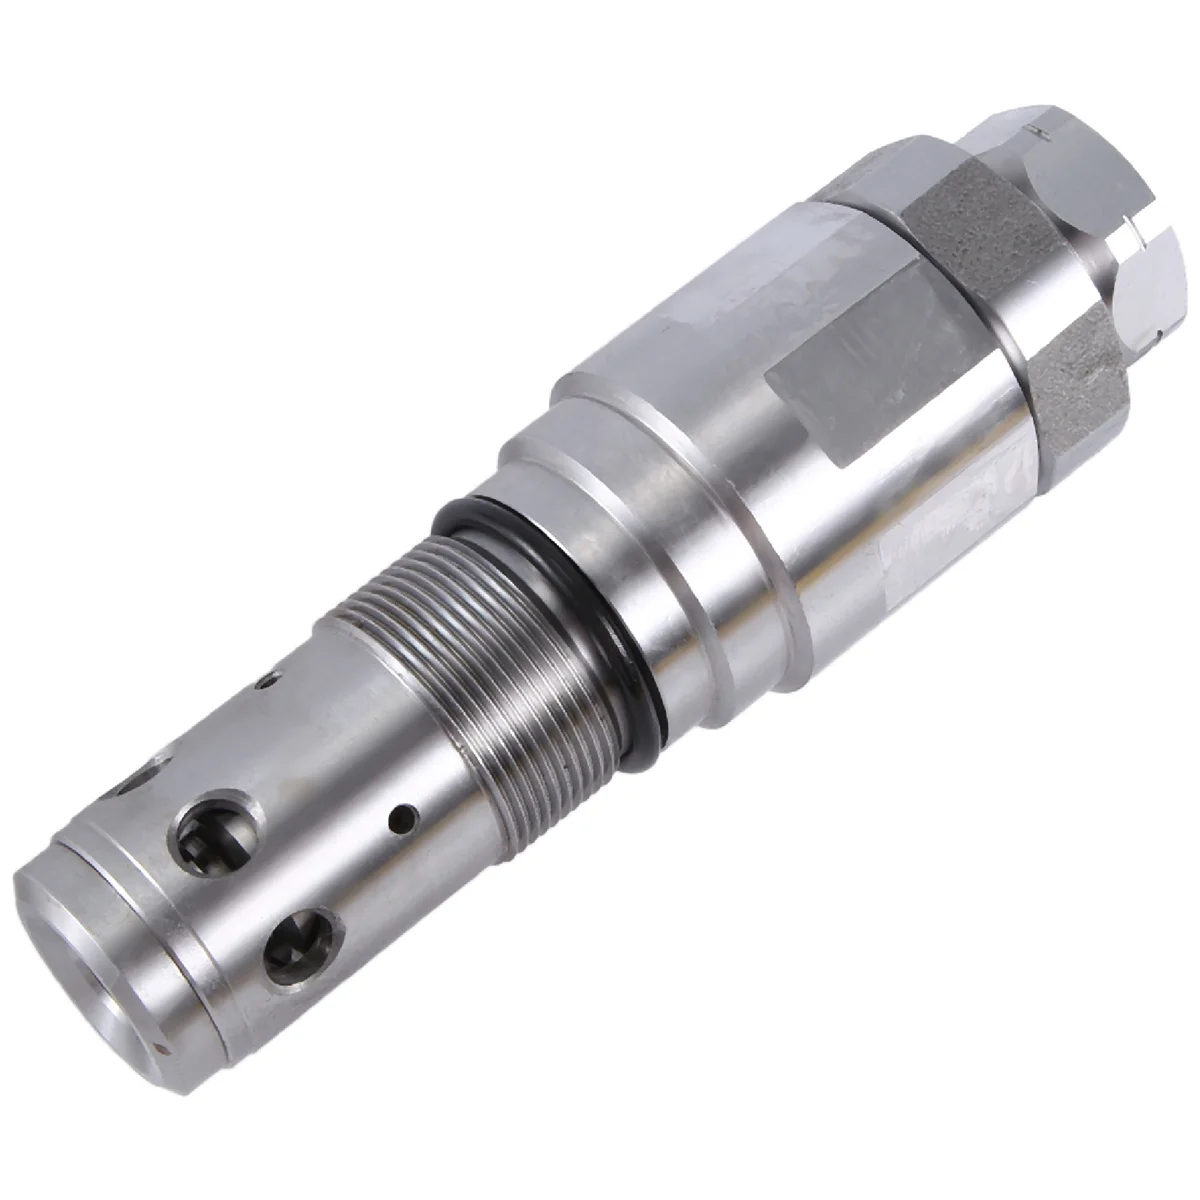 Гидравлический предохранительный клапан для экскаватора Kobelco EX200-5 ZAX200 ZAX240-3 SK200-6 SK200-6E DH200-5 4386065 YN22V00014F1 - 3